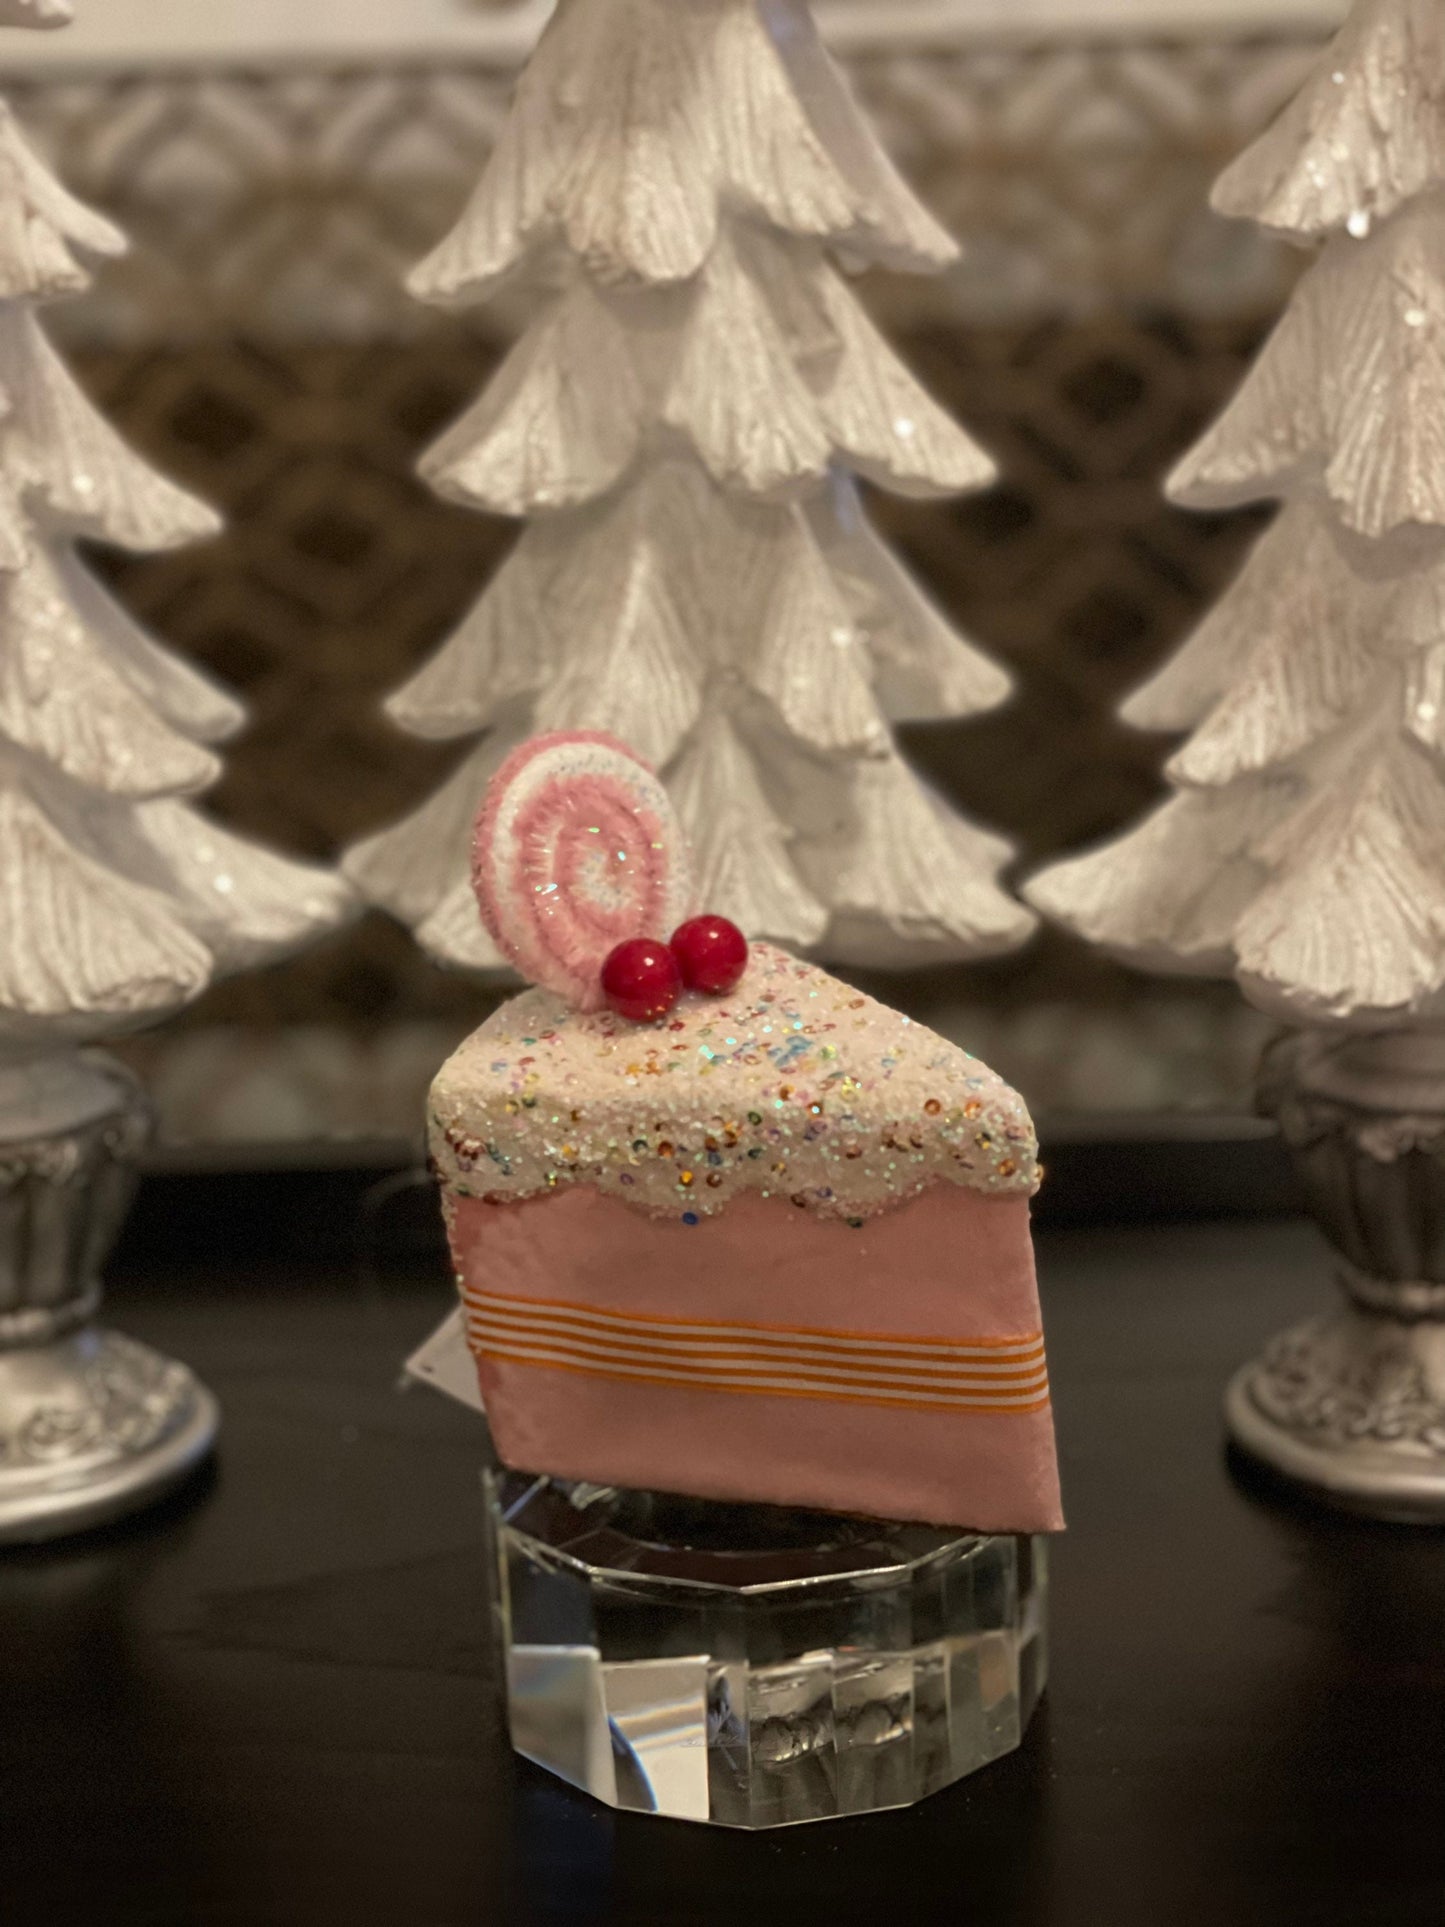 6" Candy cake slice soft pink